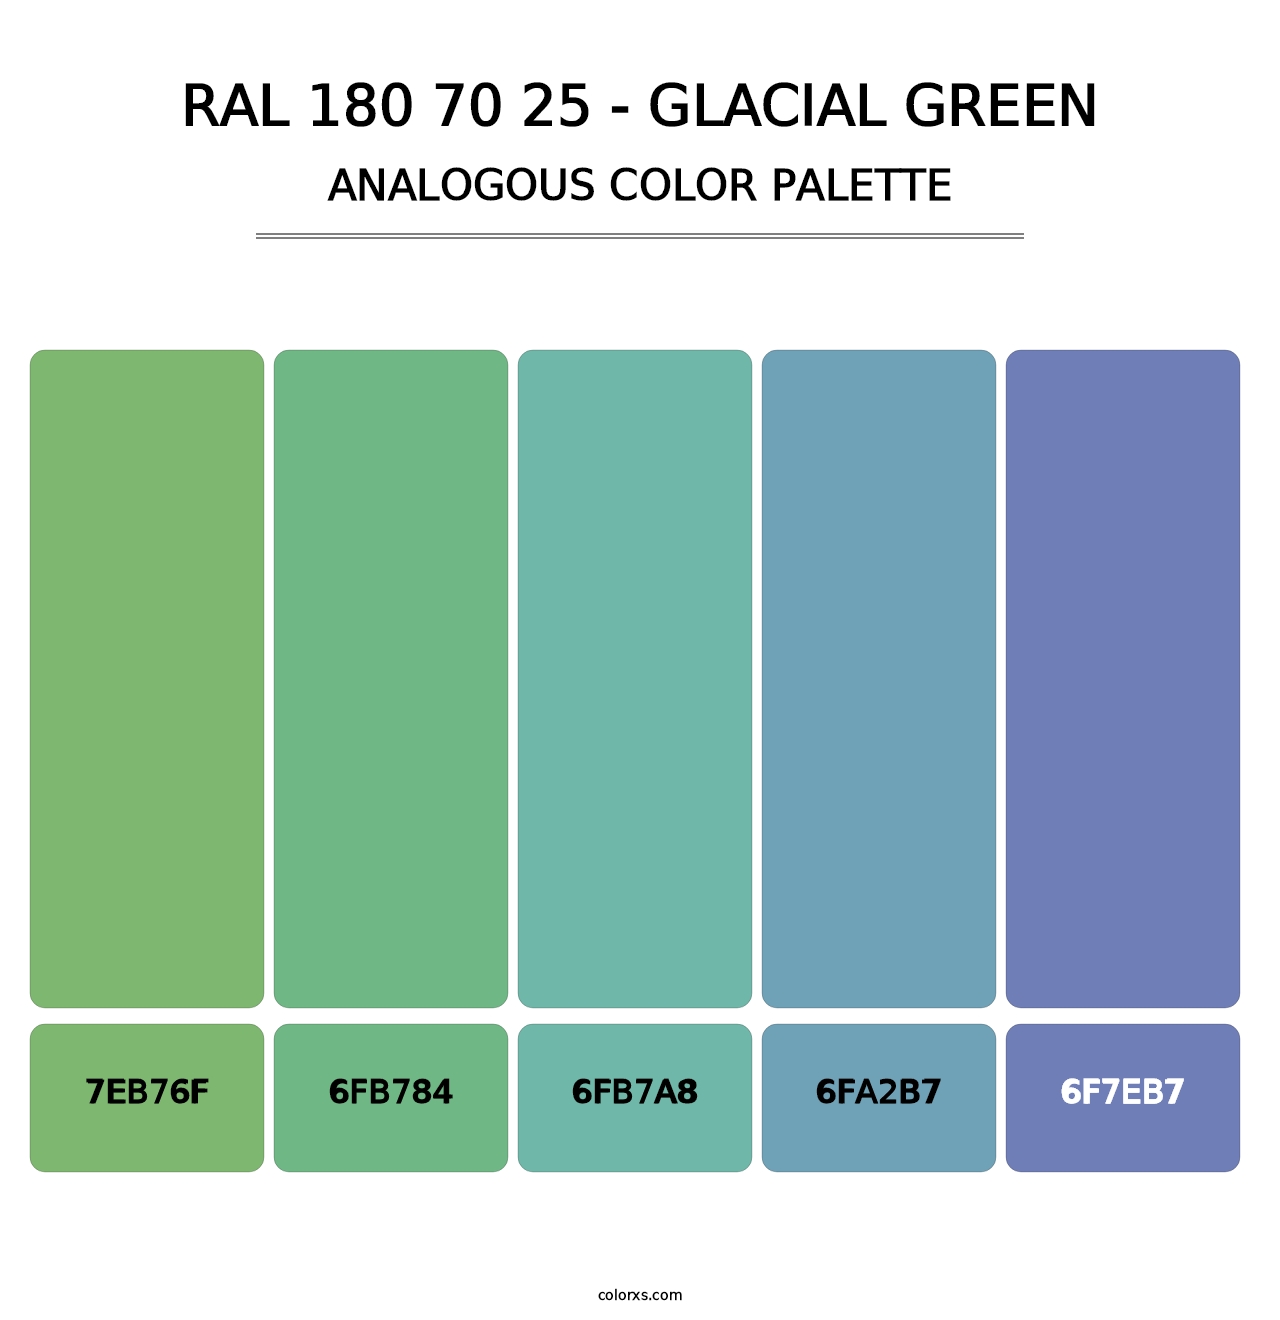 RAL 180 70 25 - Glacial Green - Analogous Color Palette